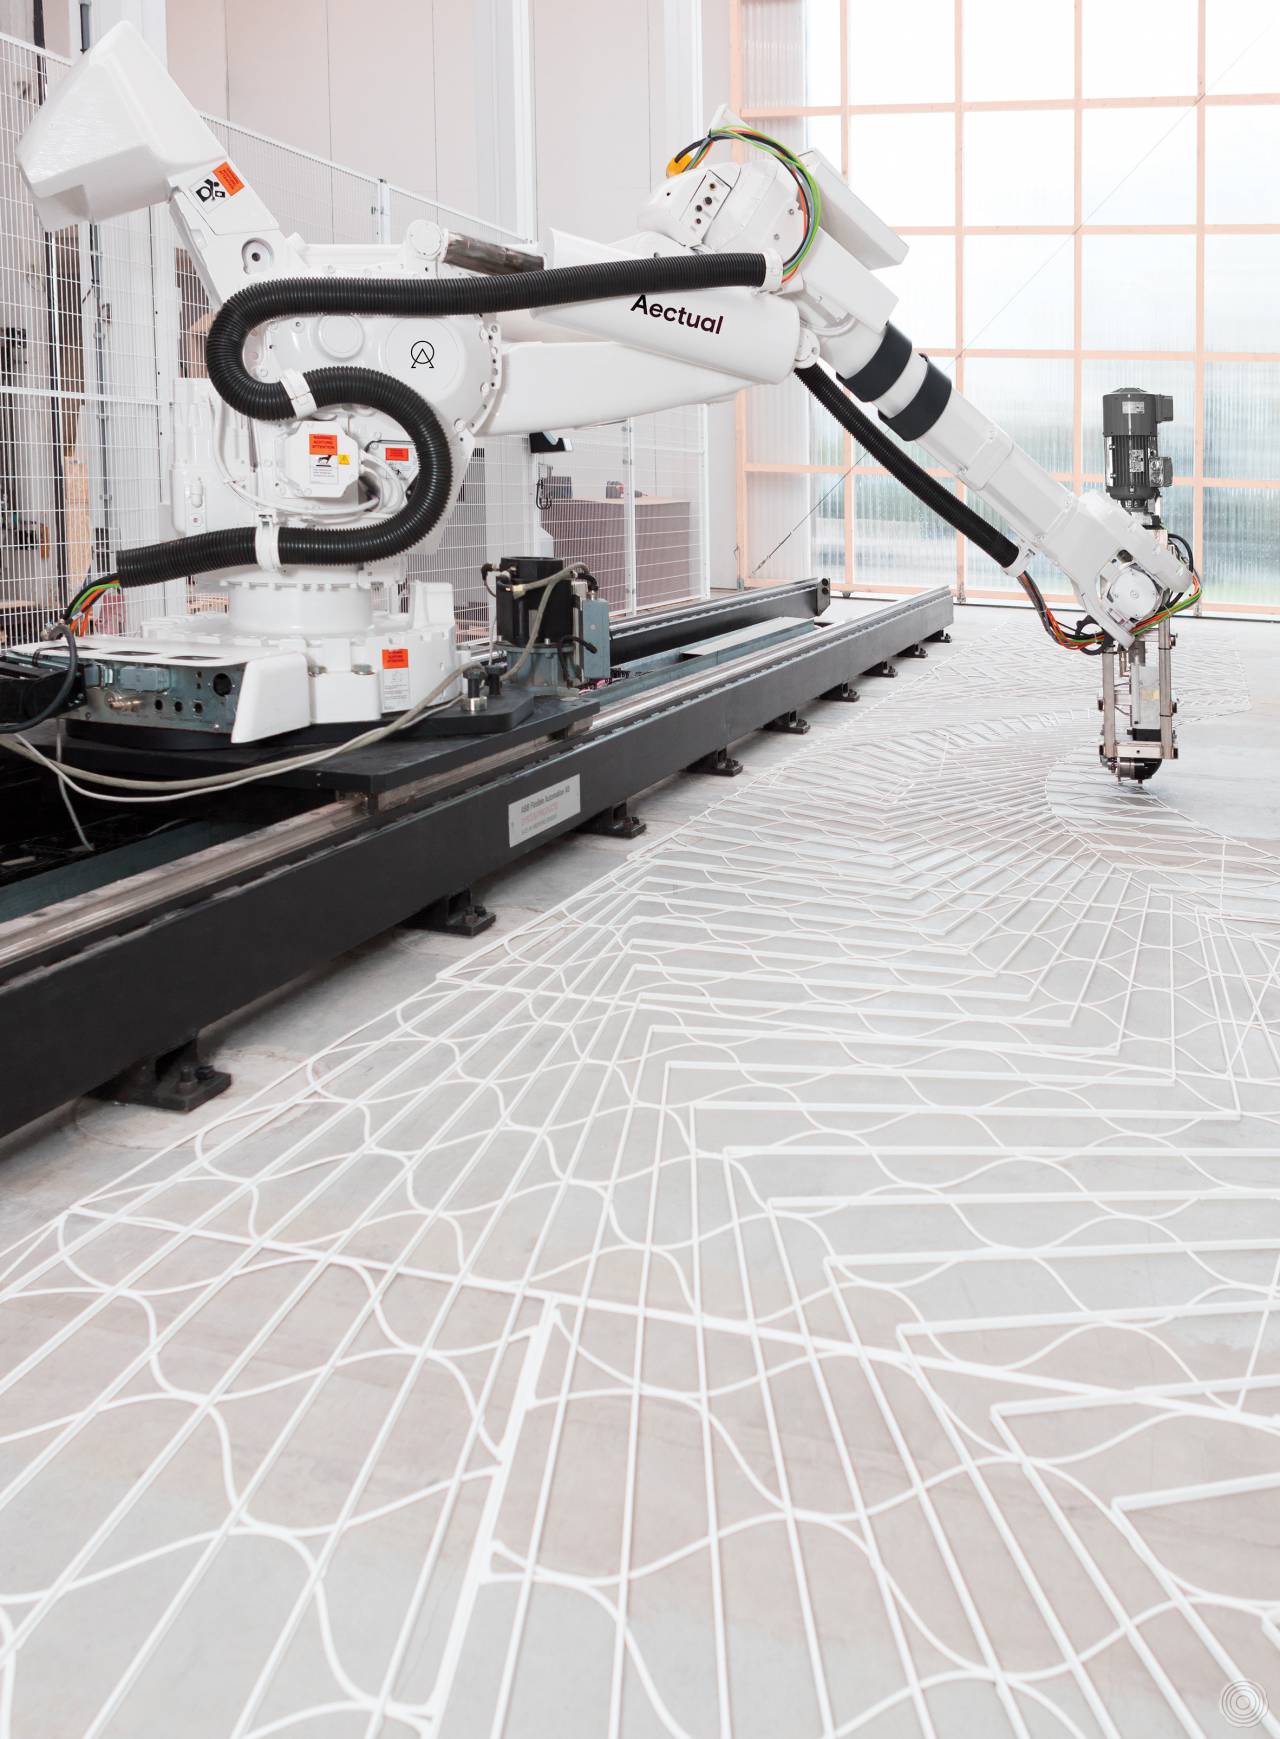 3D printed terrazzo floors